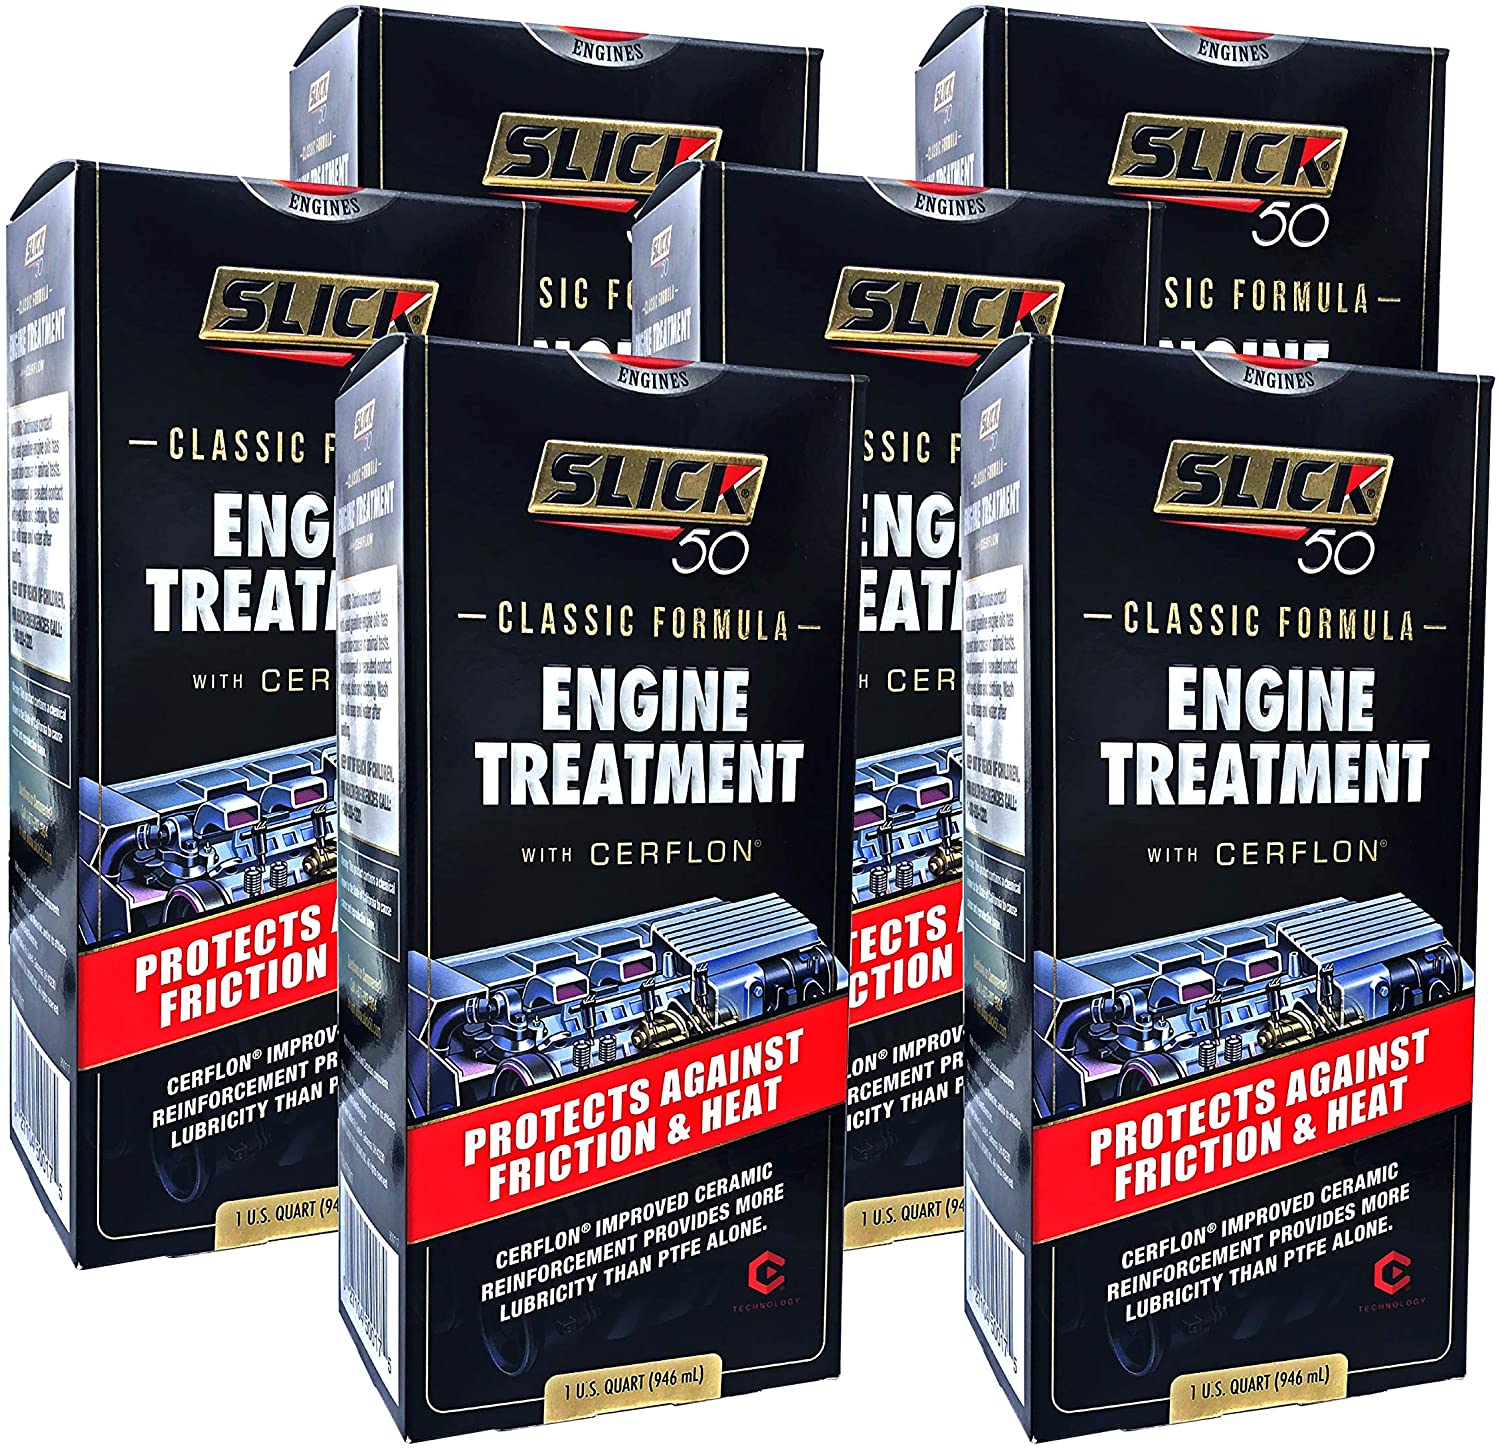 Slick 50 SL-750017-06 Classic Engine Treatment with Cerflon PTFE, 32 fl. oz, 6 Pack